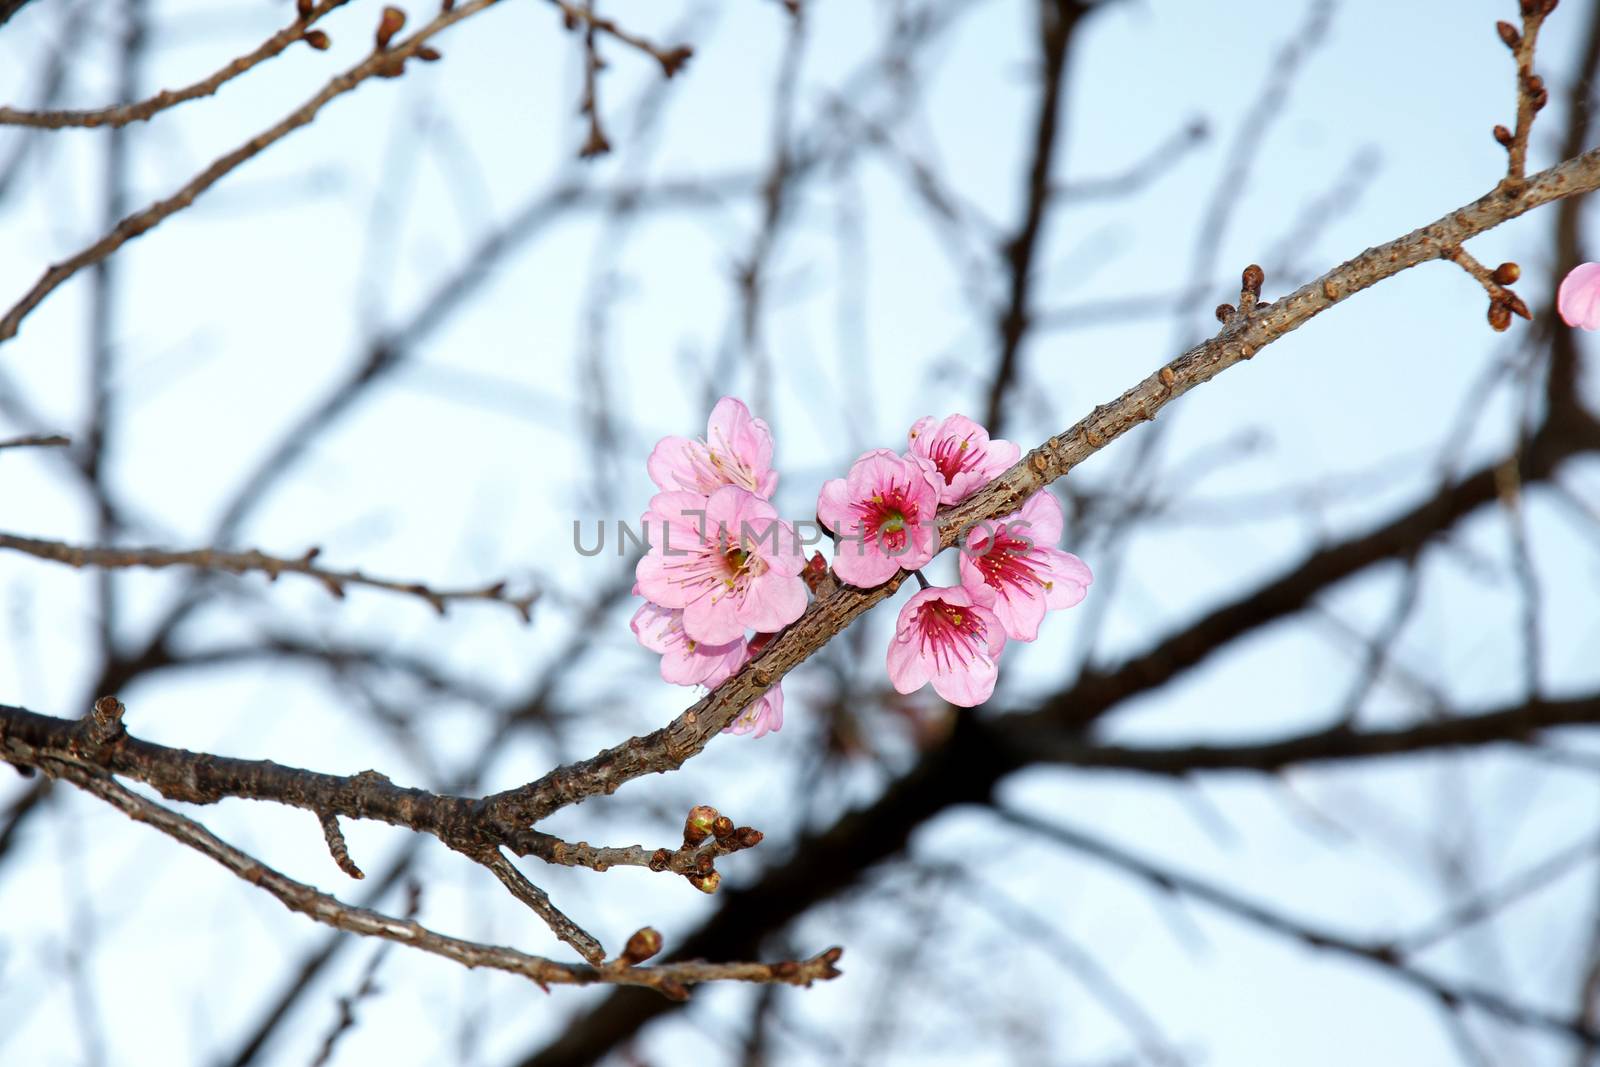 Cherry blossom or Sakura flower with blue sky, Chiangmai Thailand